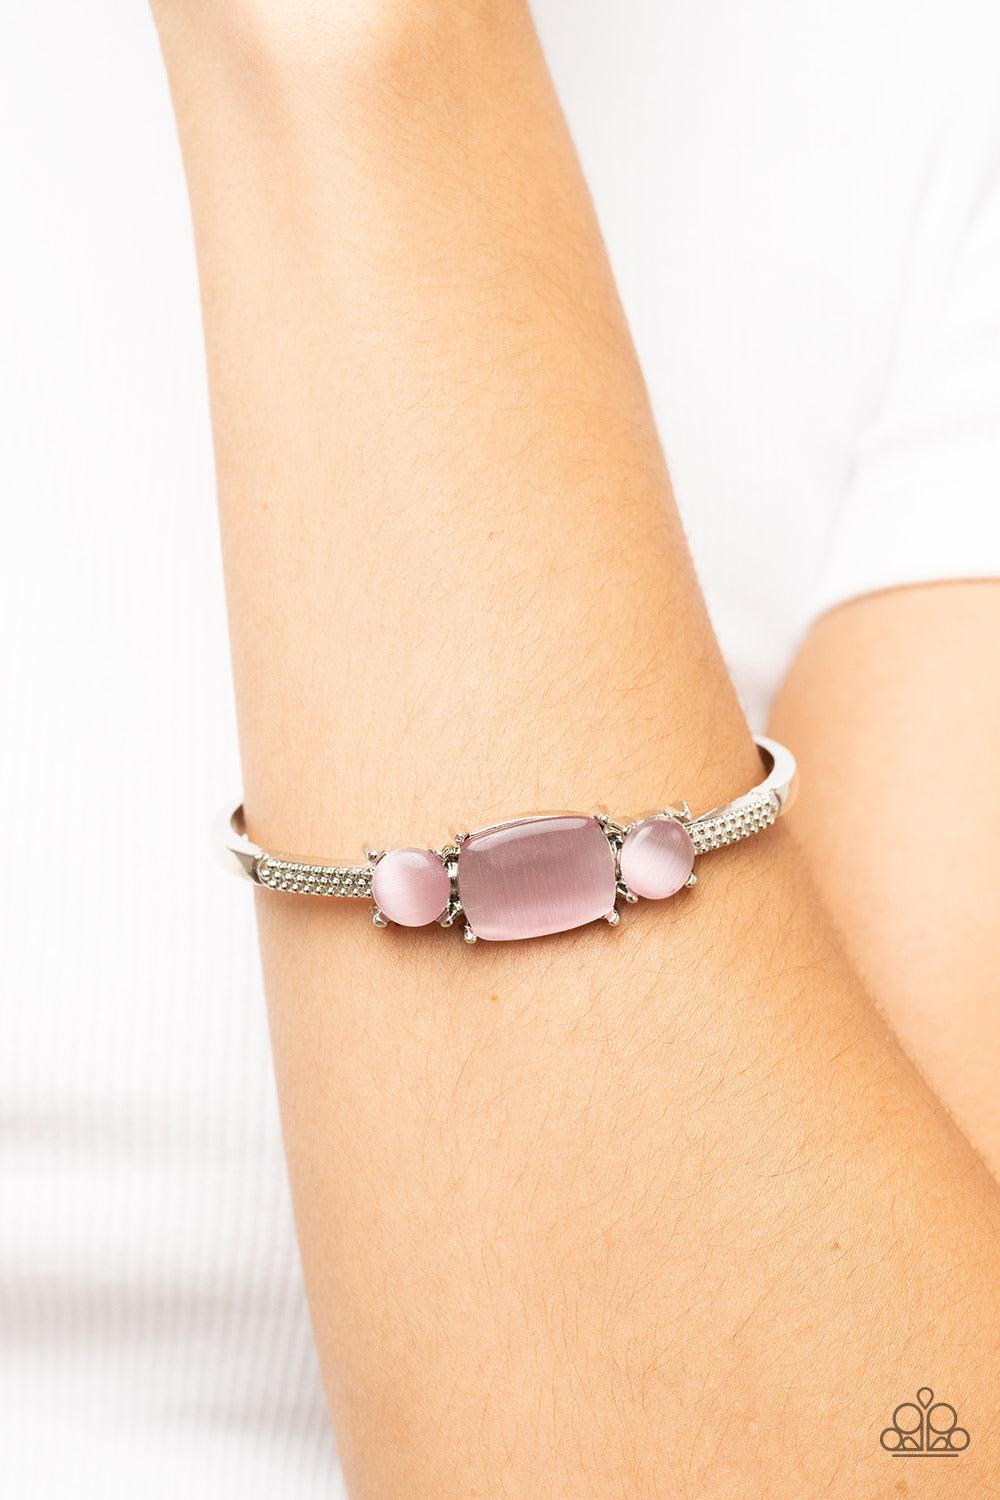 Tranquil Treasure Pink Cat's Eye Stone Cuff Bracelet - Paparazzi Accessories- lightbox - CarasShop.com - $5 Jewelry by Cara Jewels